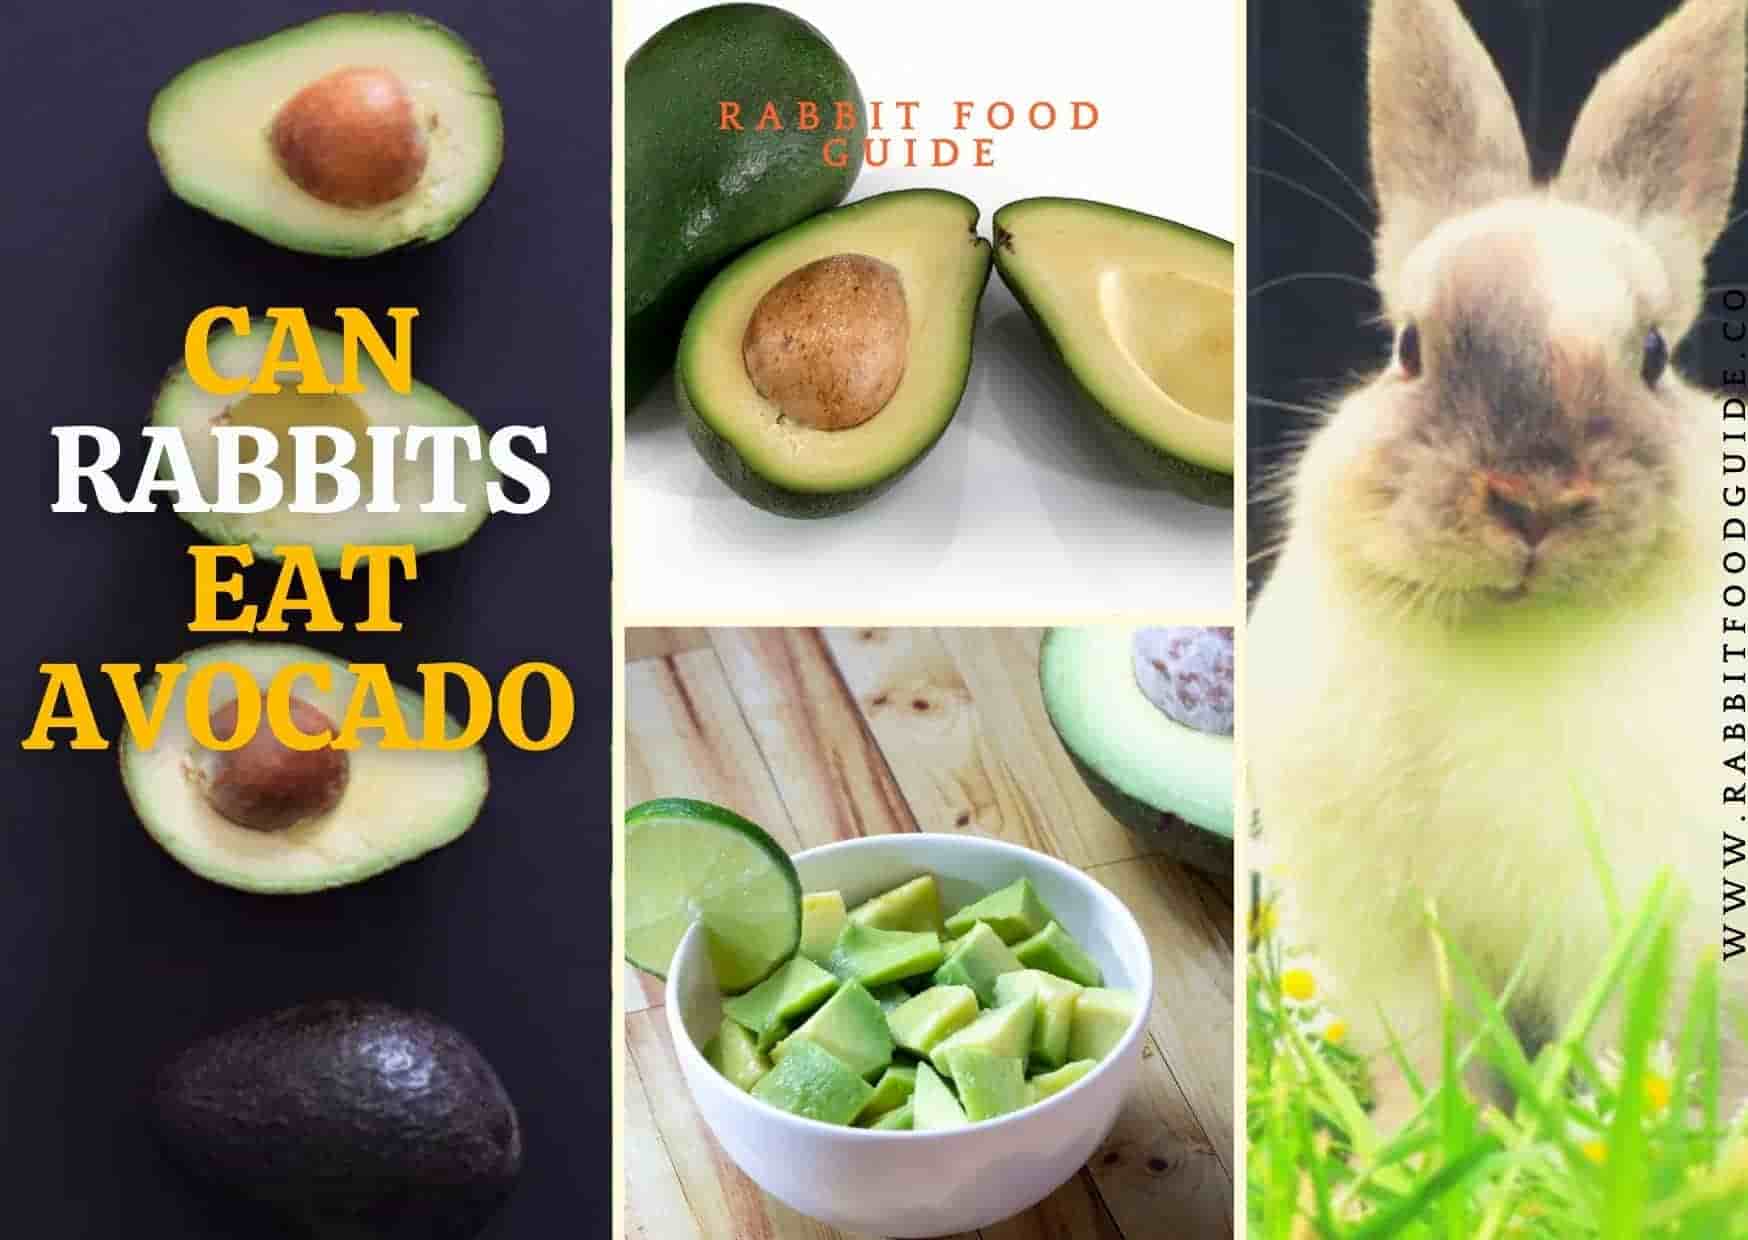 can rabbits eat avocado?